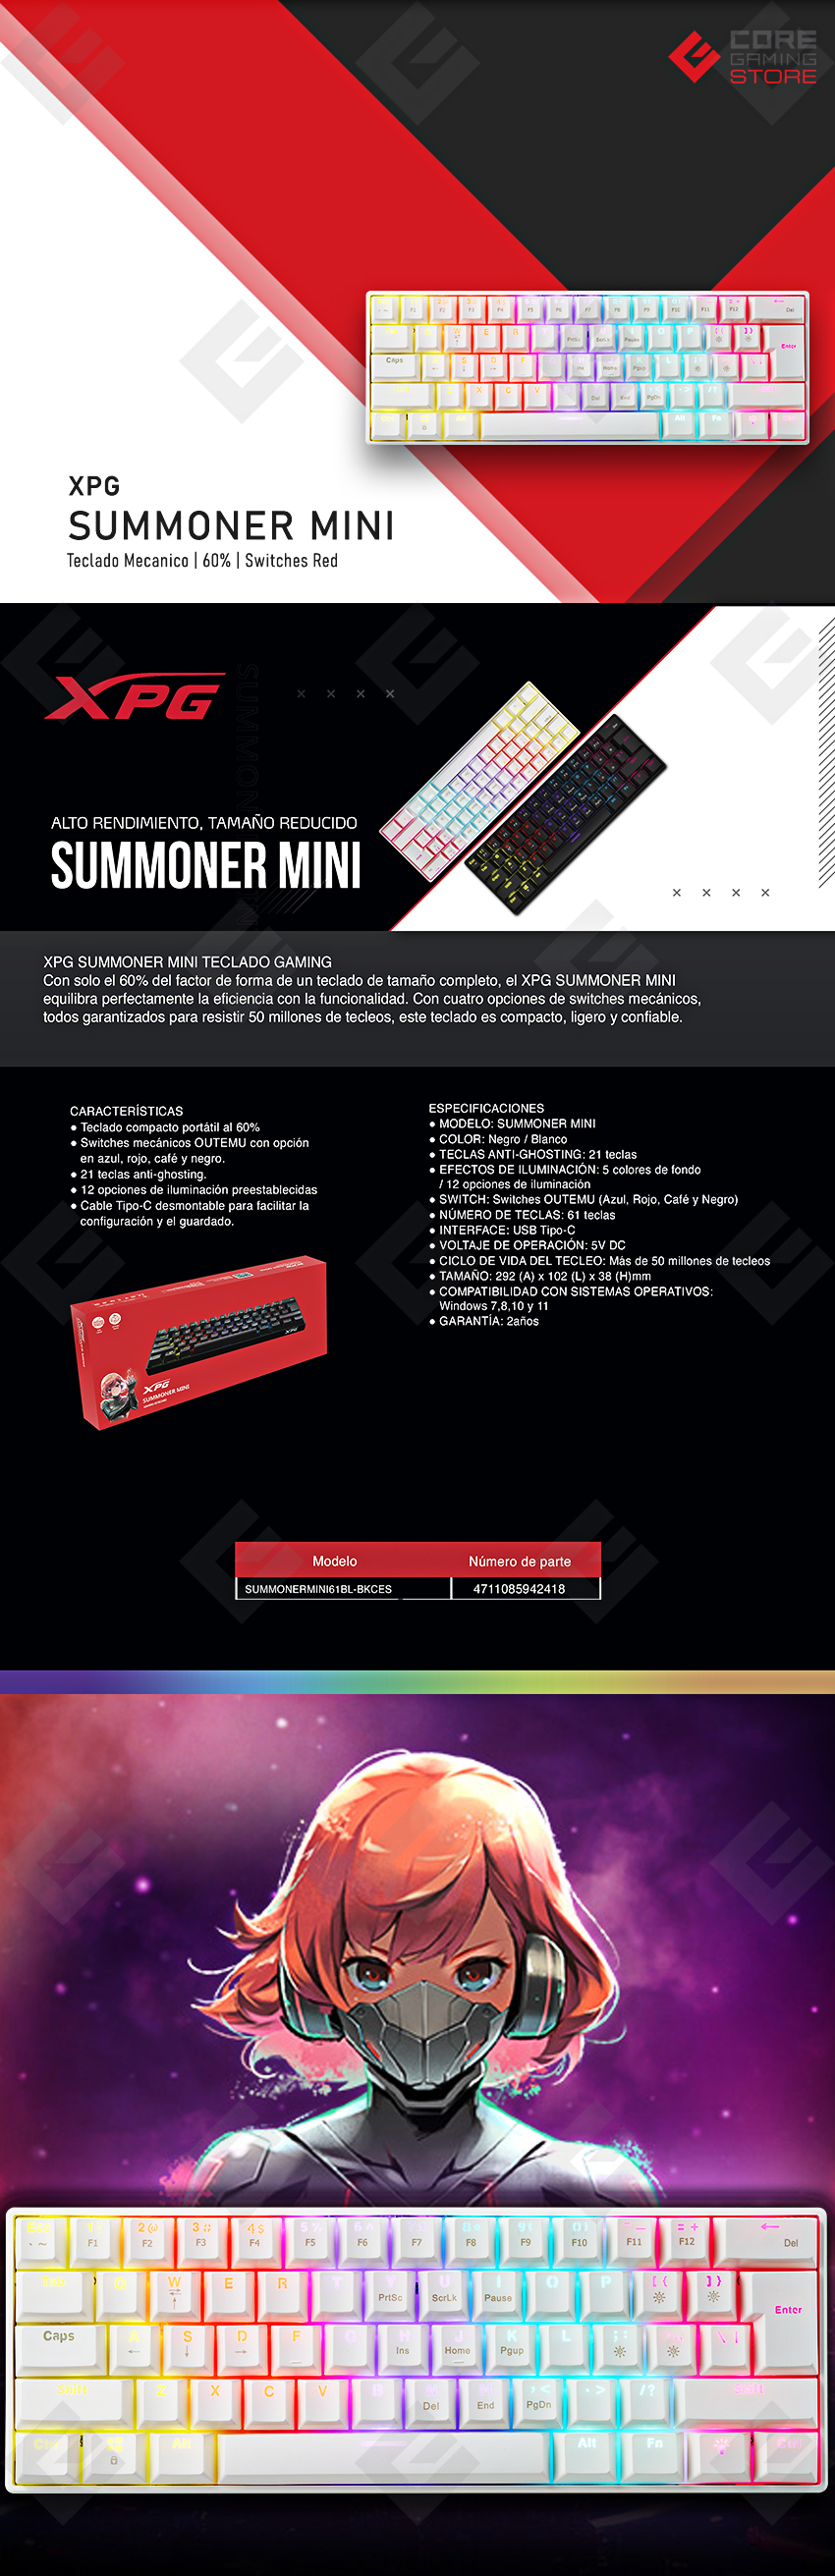 Teclado Gamer Mecanico XPG Summoner Mini | Blanco | Switches Outemu Red | 60% - SUMMONERMINI61RD-WHCES